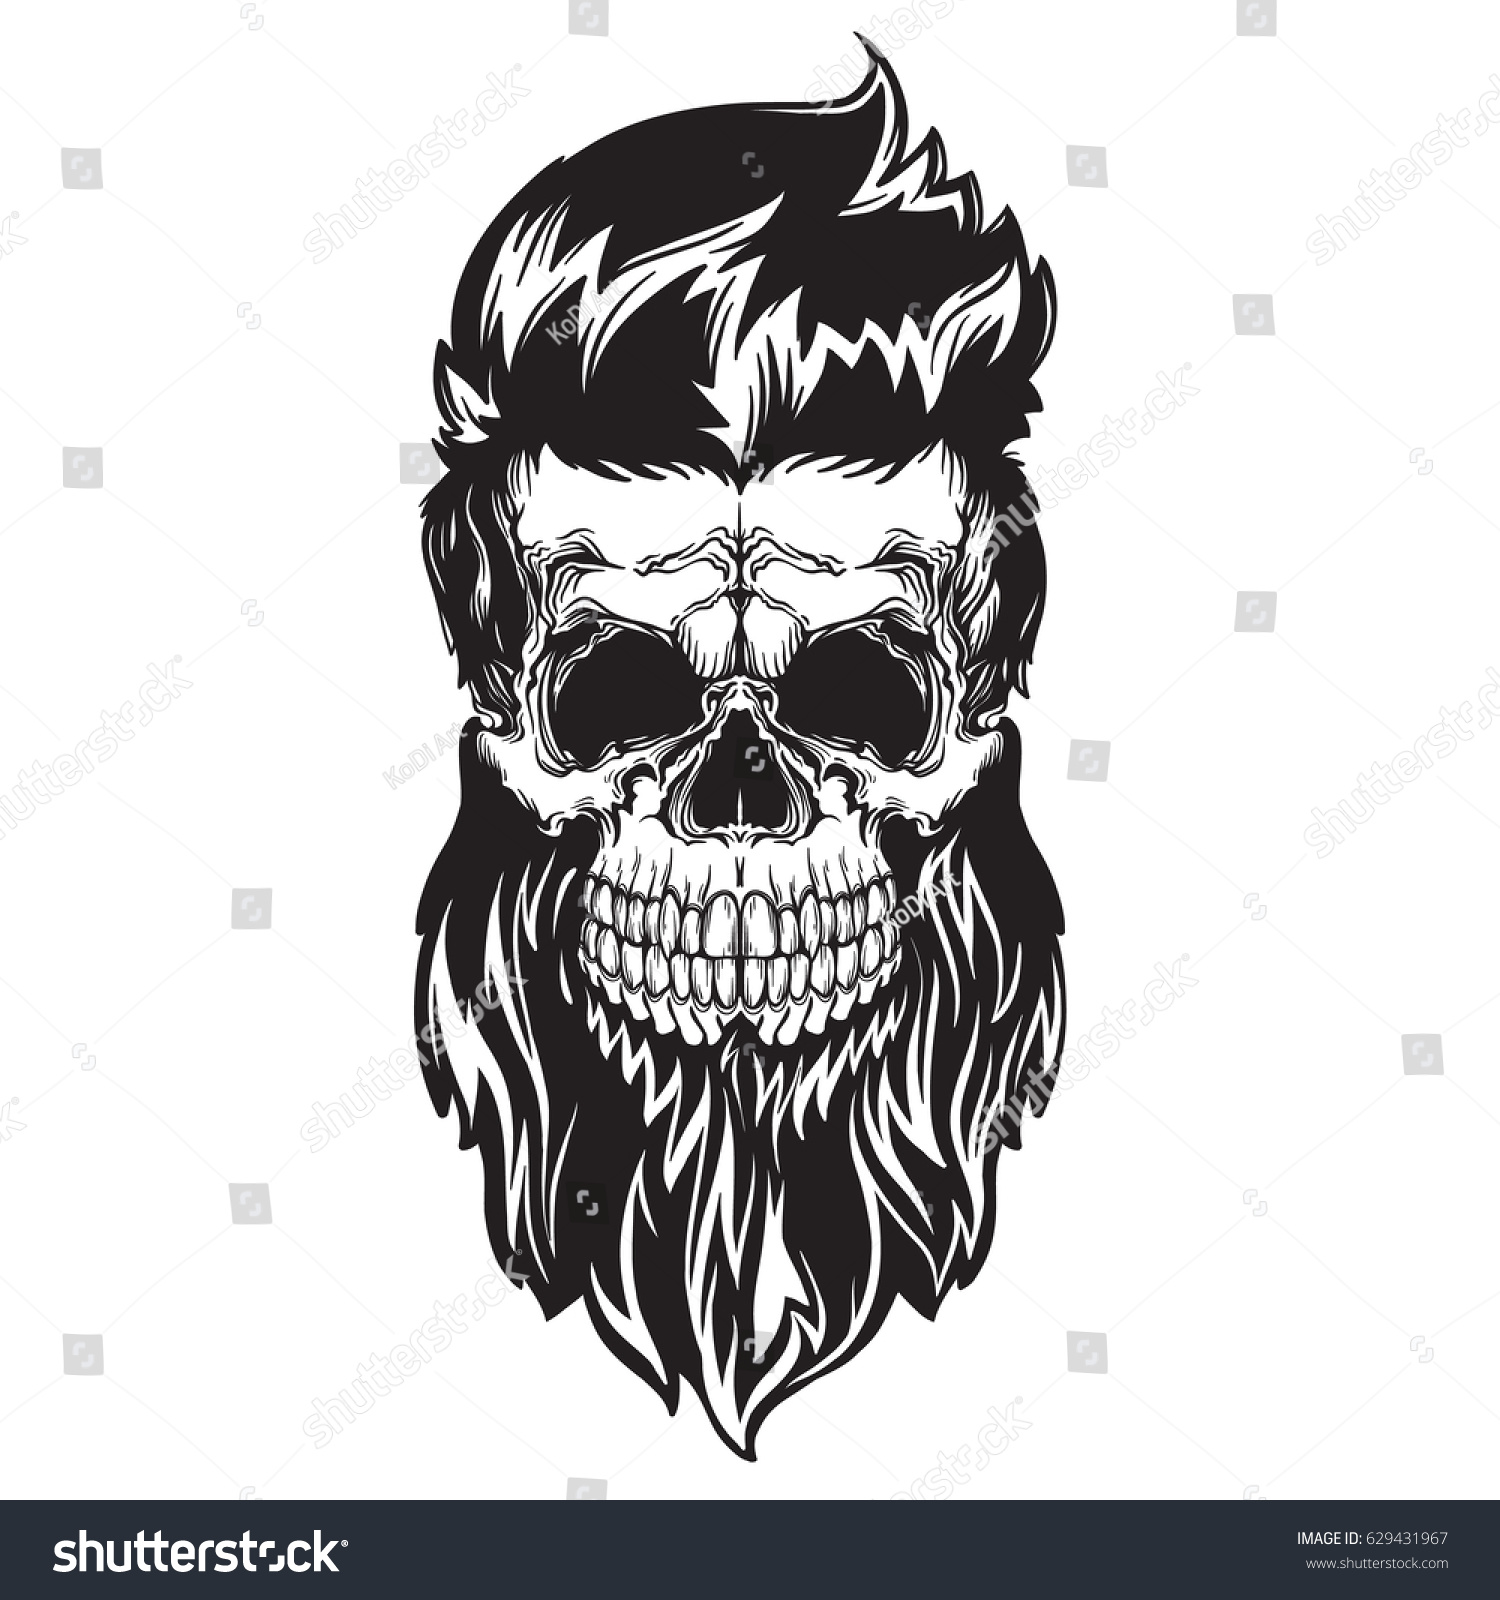 Black Vector Illustration Skull Beard Hipster Stock Vector Royalty Free 629431967 Shutterstock 